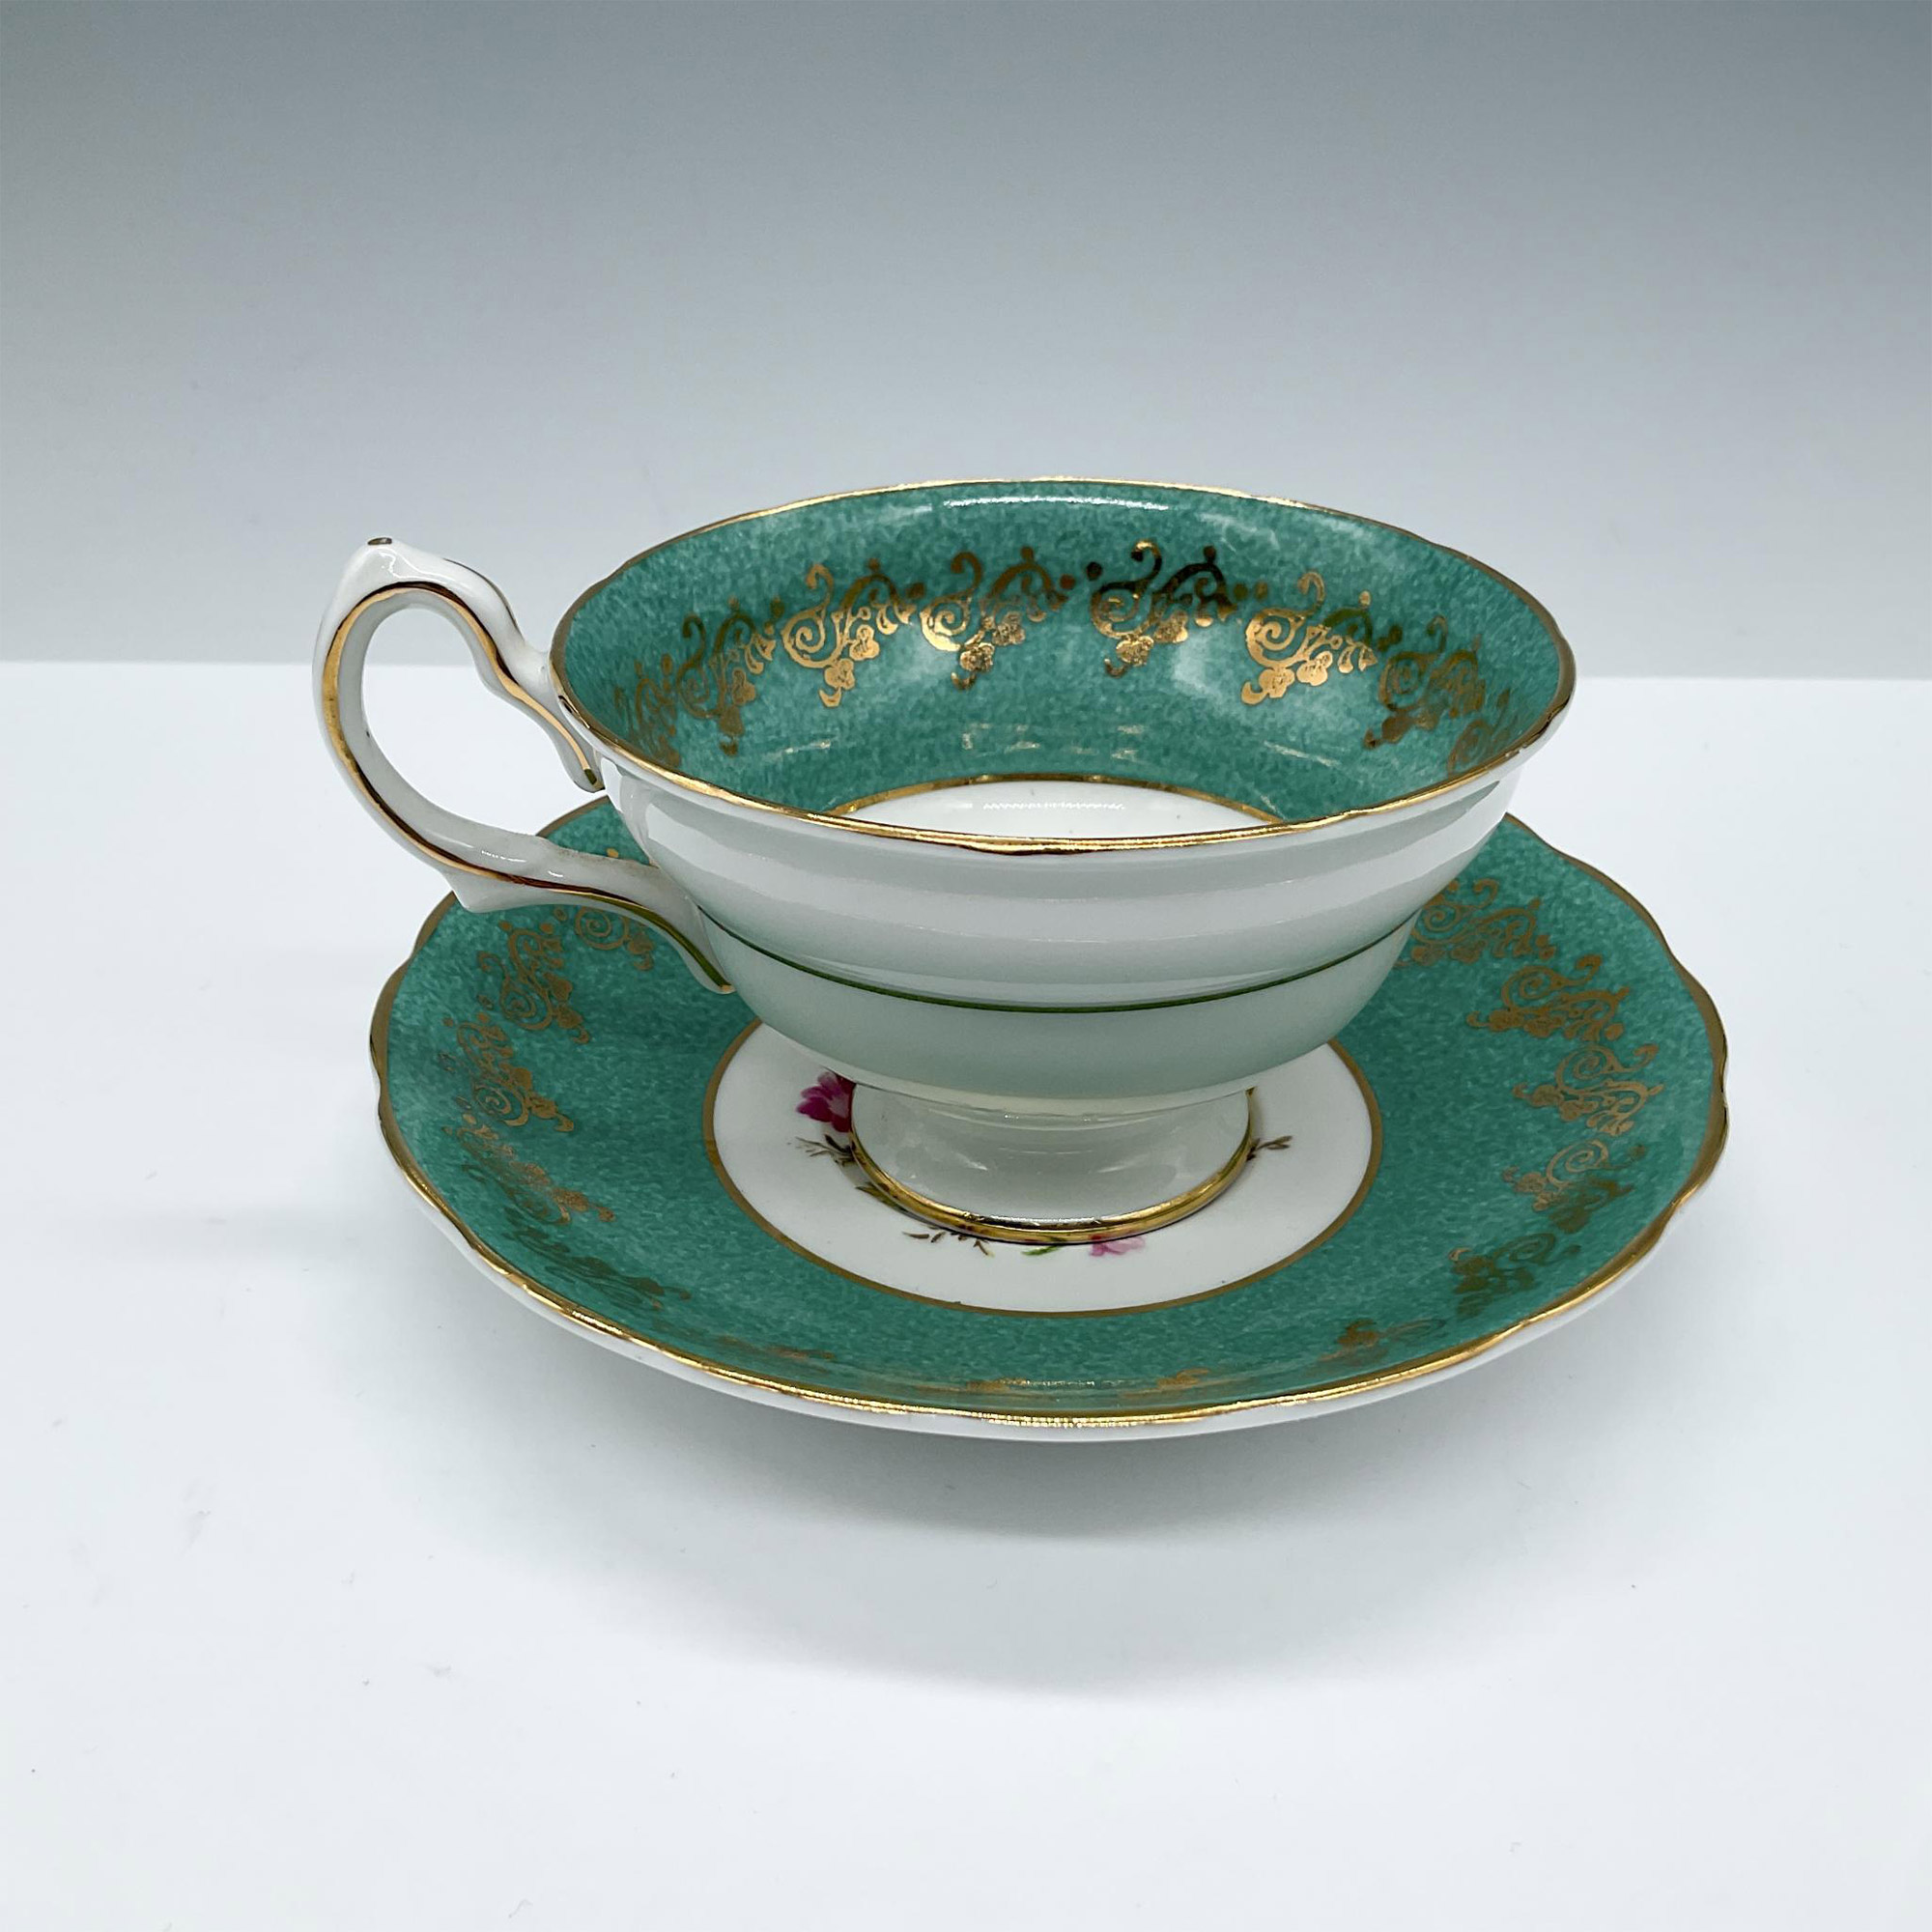 Vintage Grosvernor Bone China Tea Cup and Saucer, Teal - Image 2 of 4